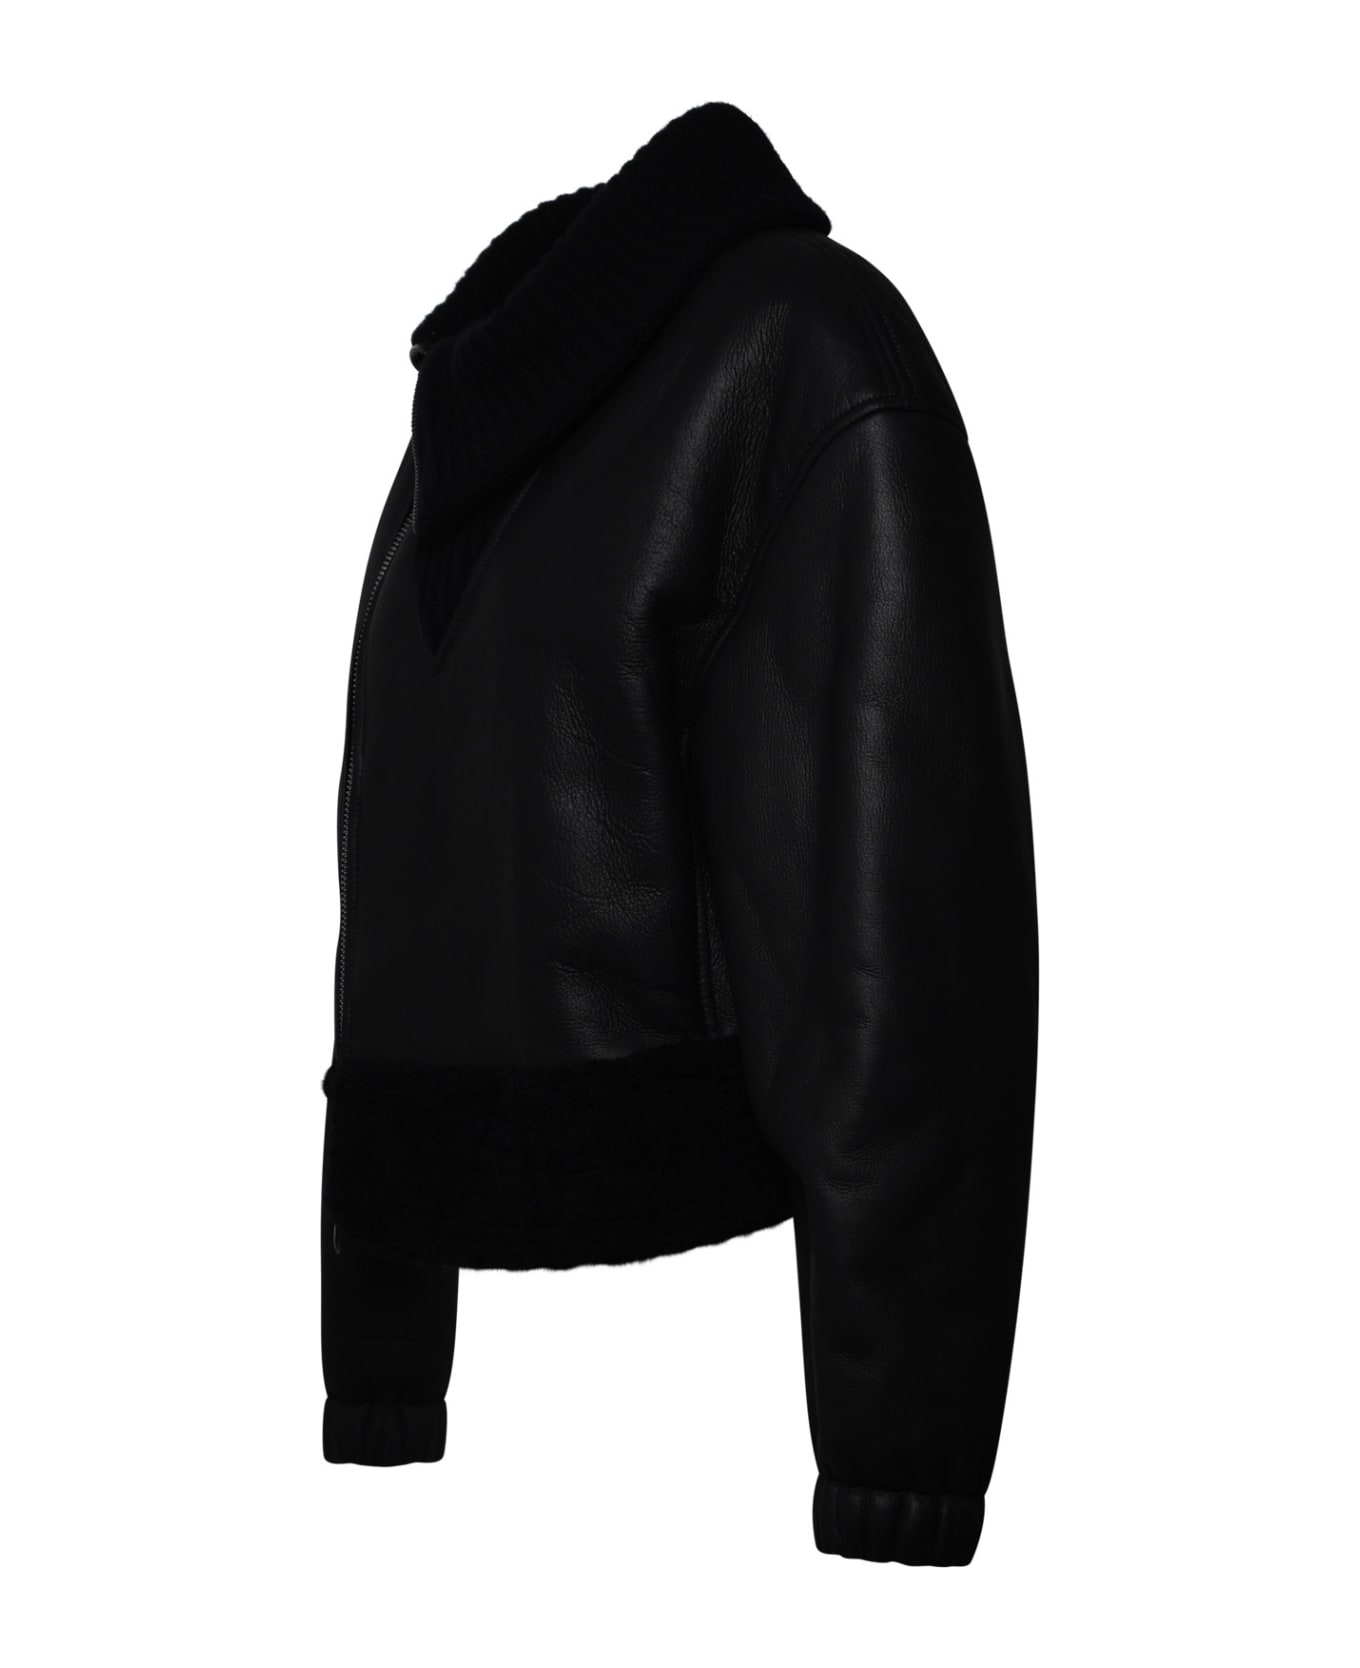 Ferrari Black Leather Jacket - Black